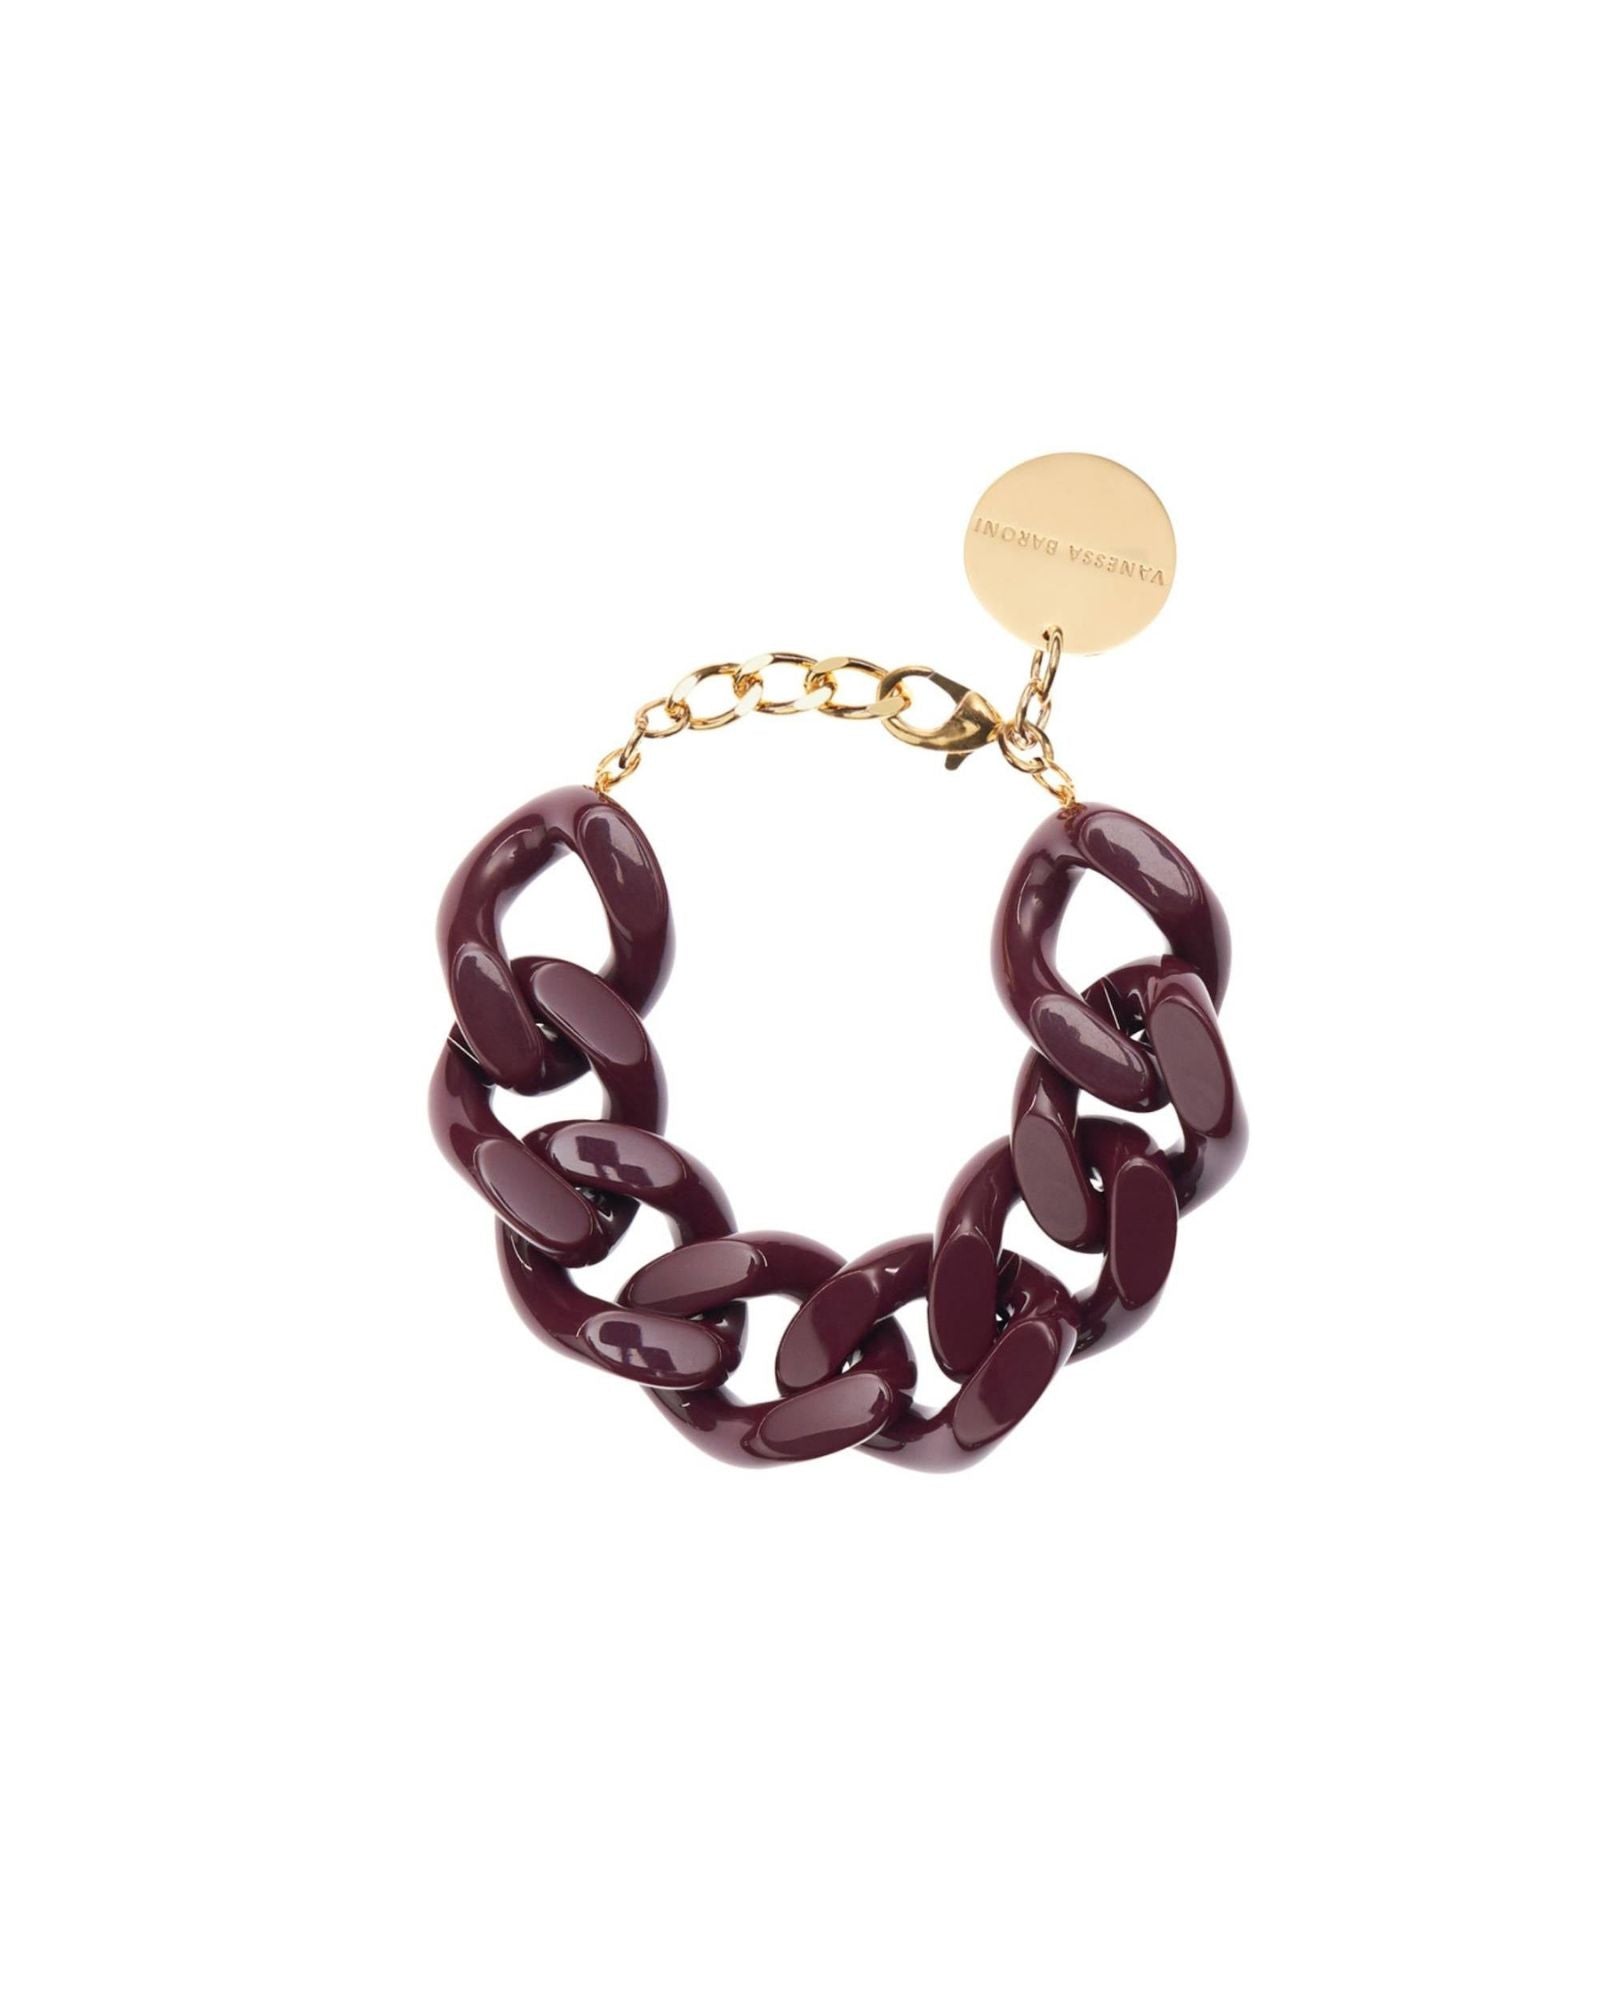 VANESSA BARONI - Great Chain Bracelet in Winter Aubergine